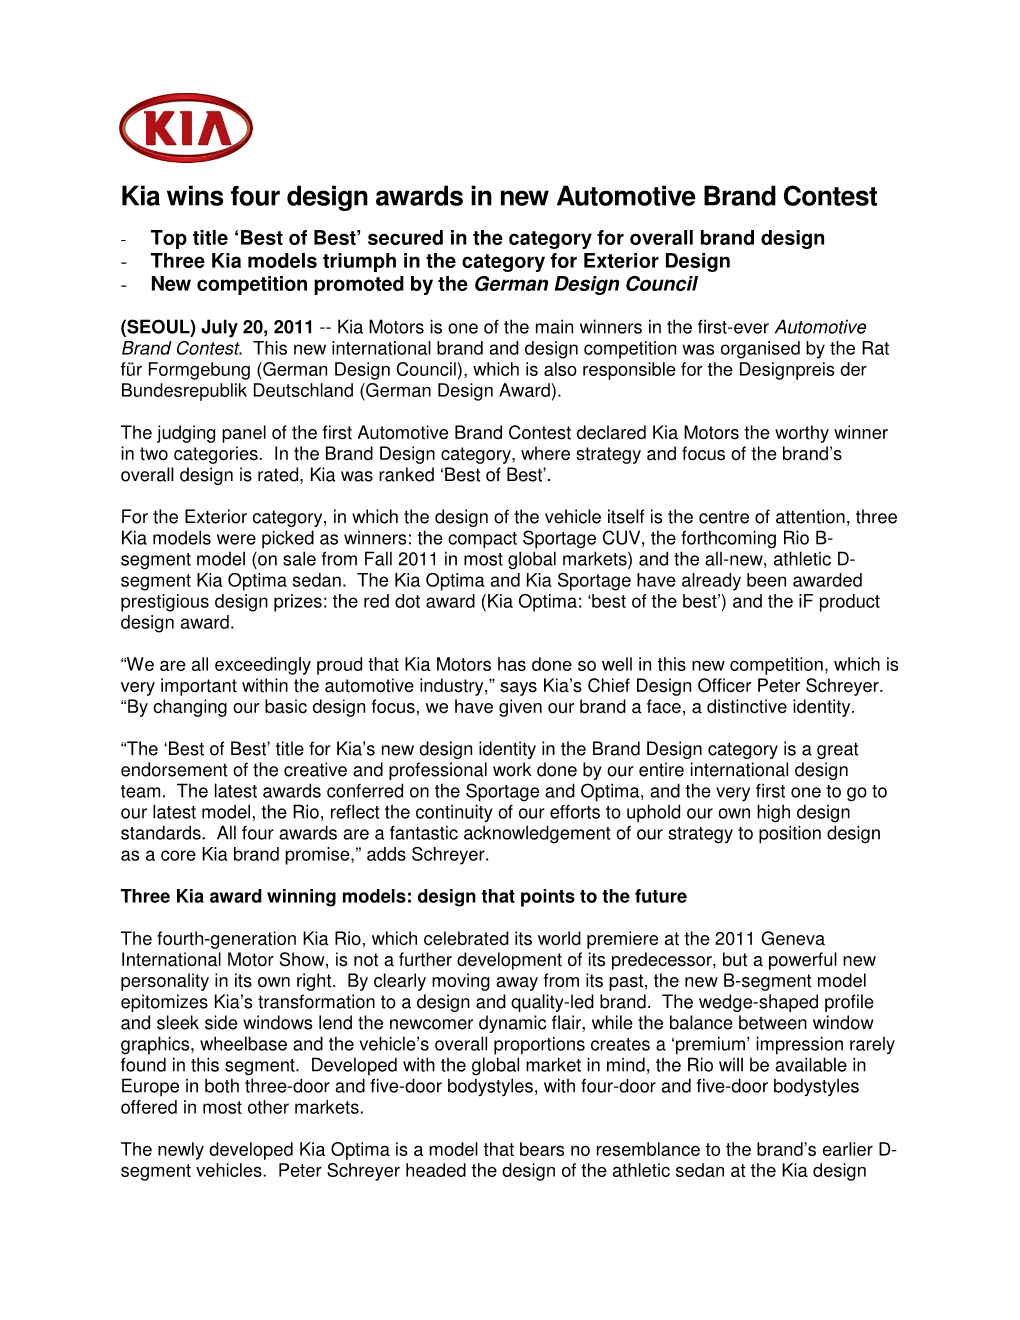 Kia Wins Four Design Awards in New Automotive Brand Contest